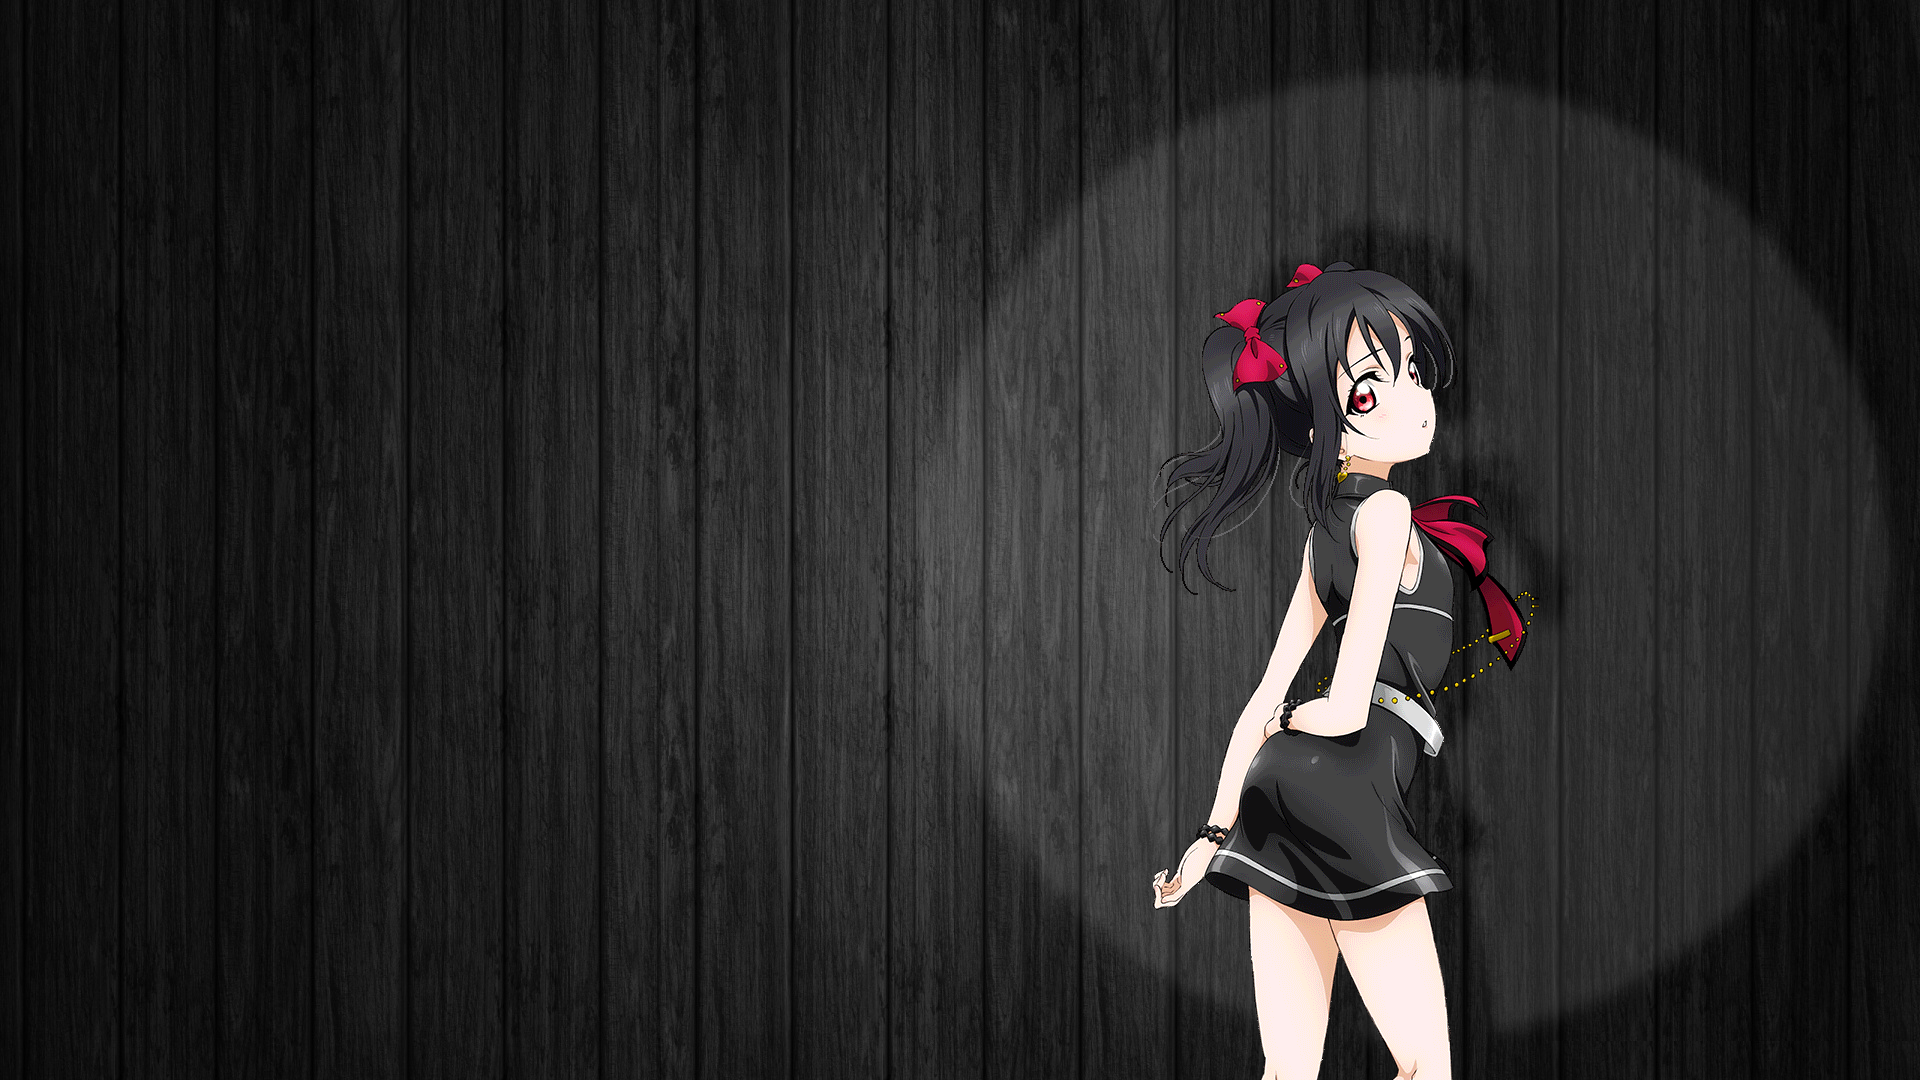 Anime 1920x1080 Love Live! Yazawa Nico anime anime girls black hair black dress black clothing red eyes